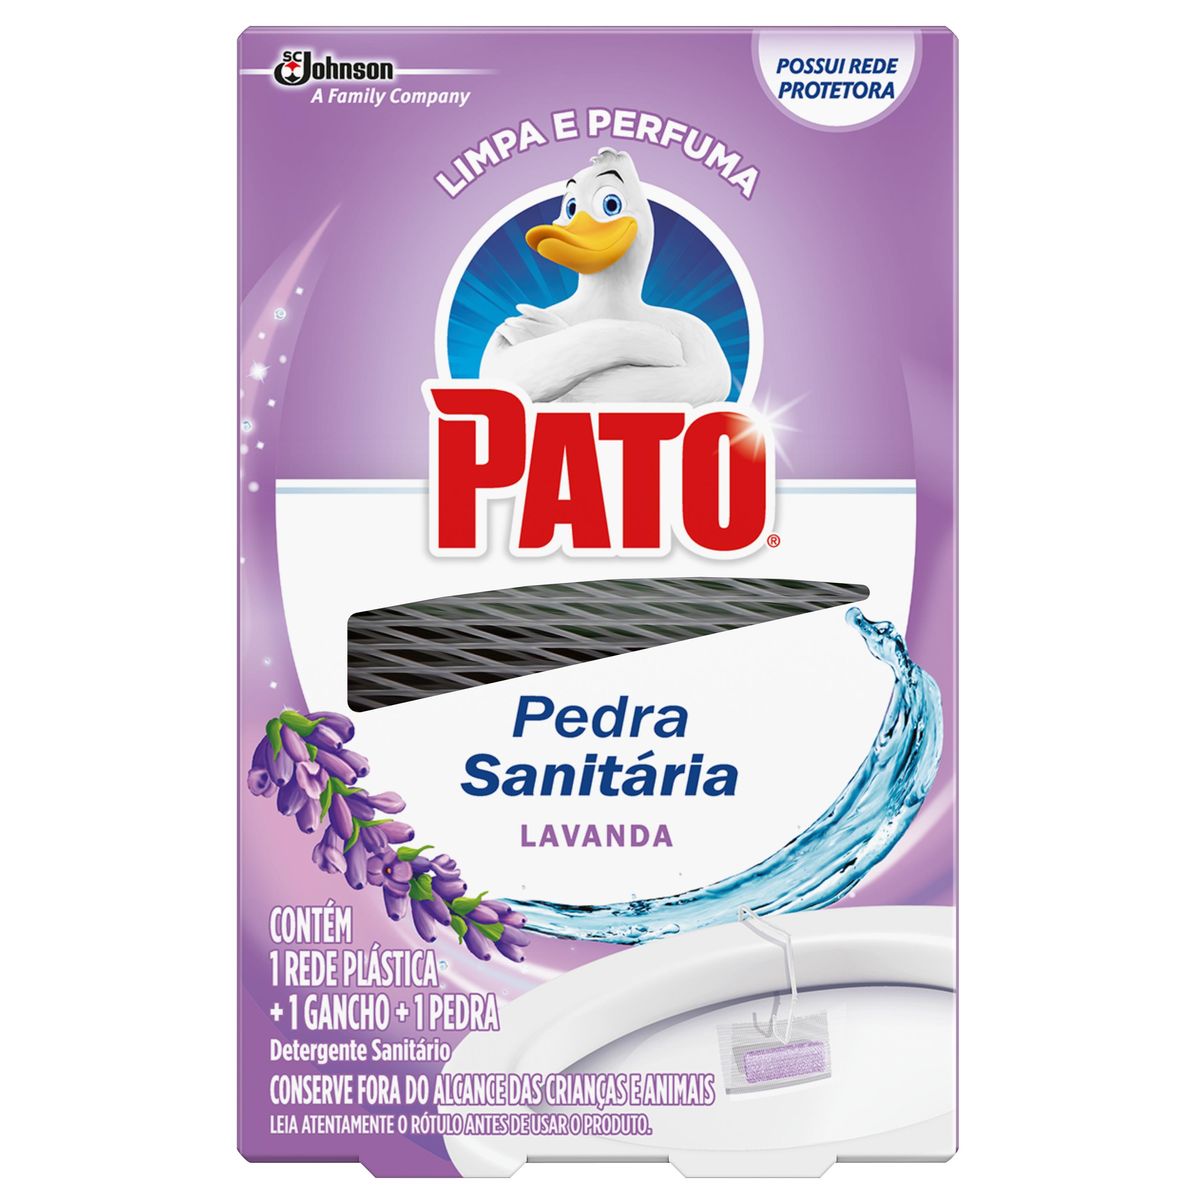 Detergente Sanitário Pato Pedra Lavanda image number 0